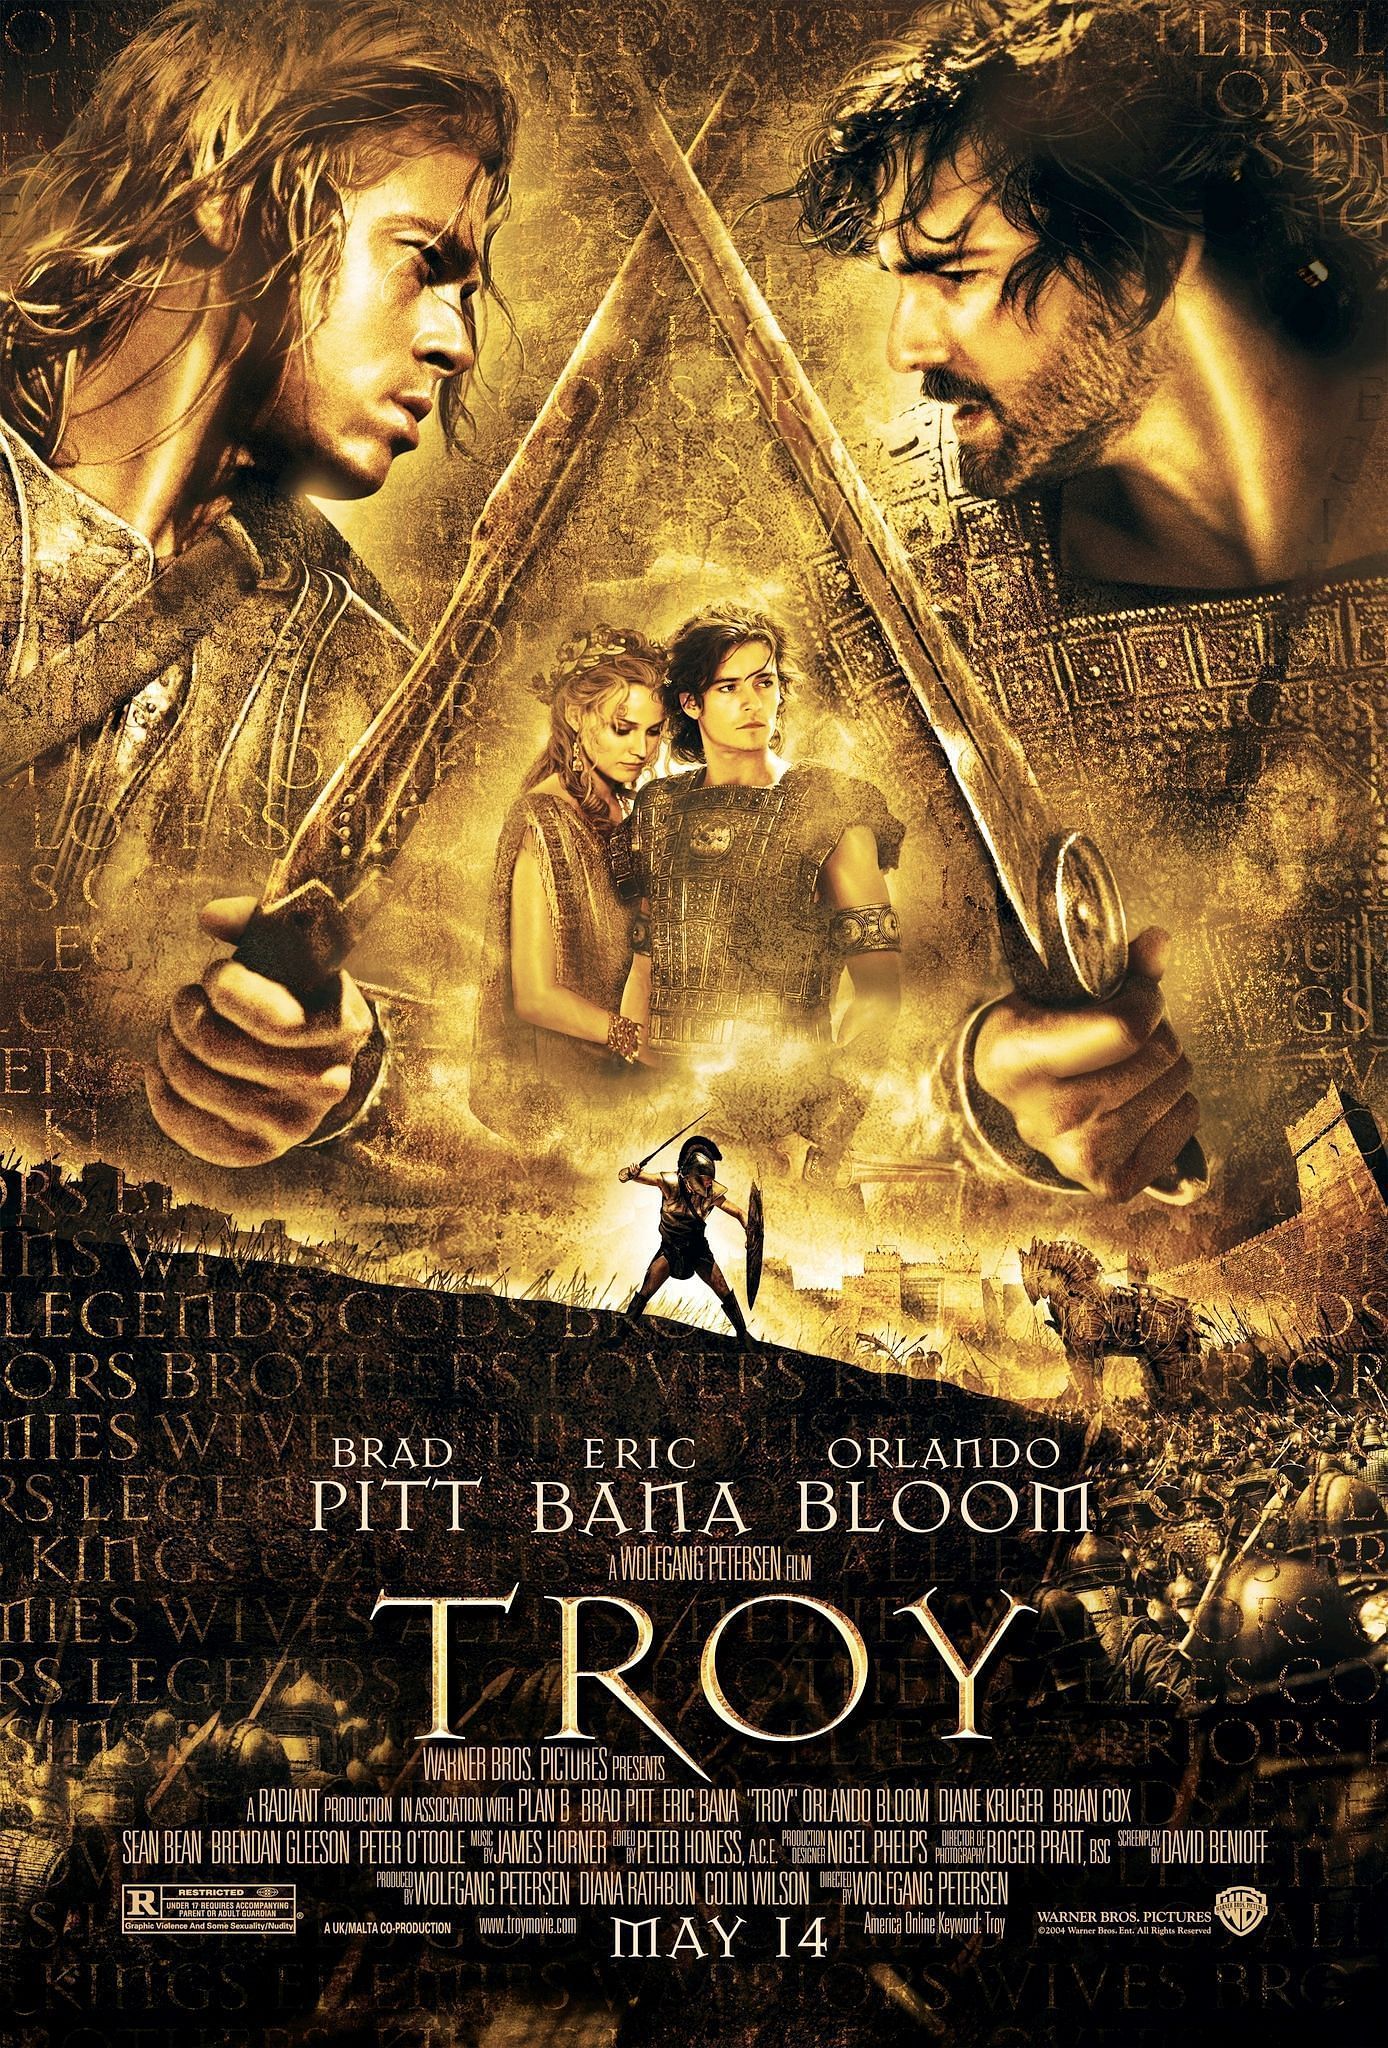 Troy (Image via Warner Bros)